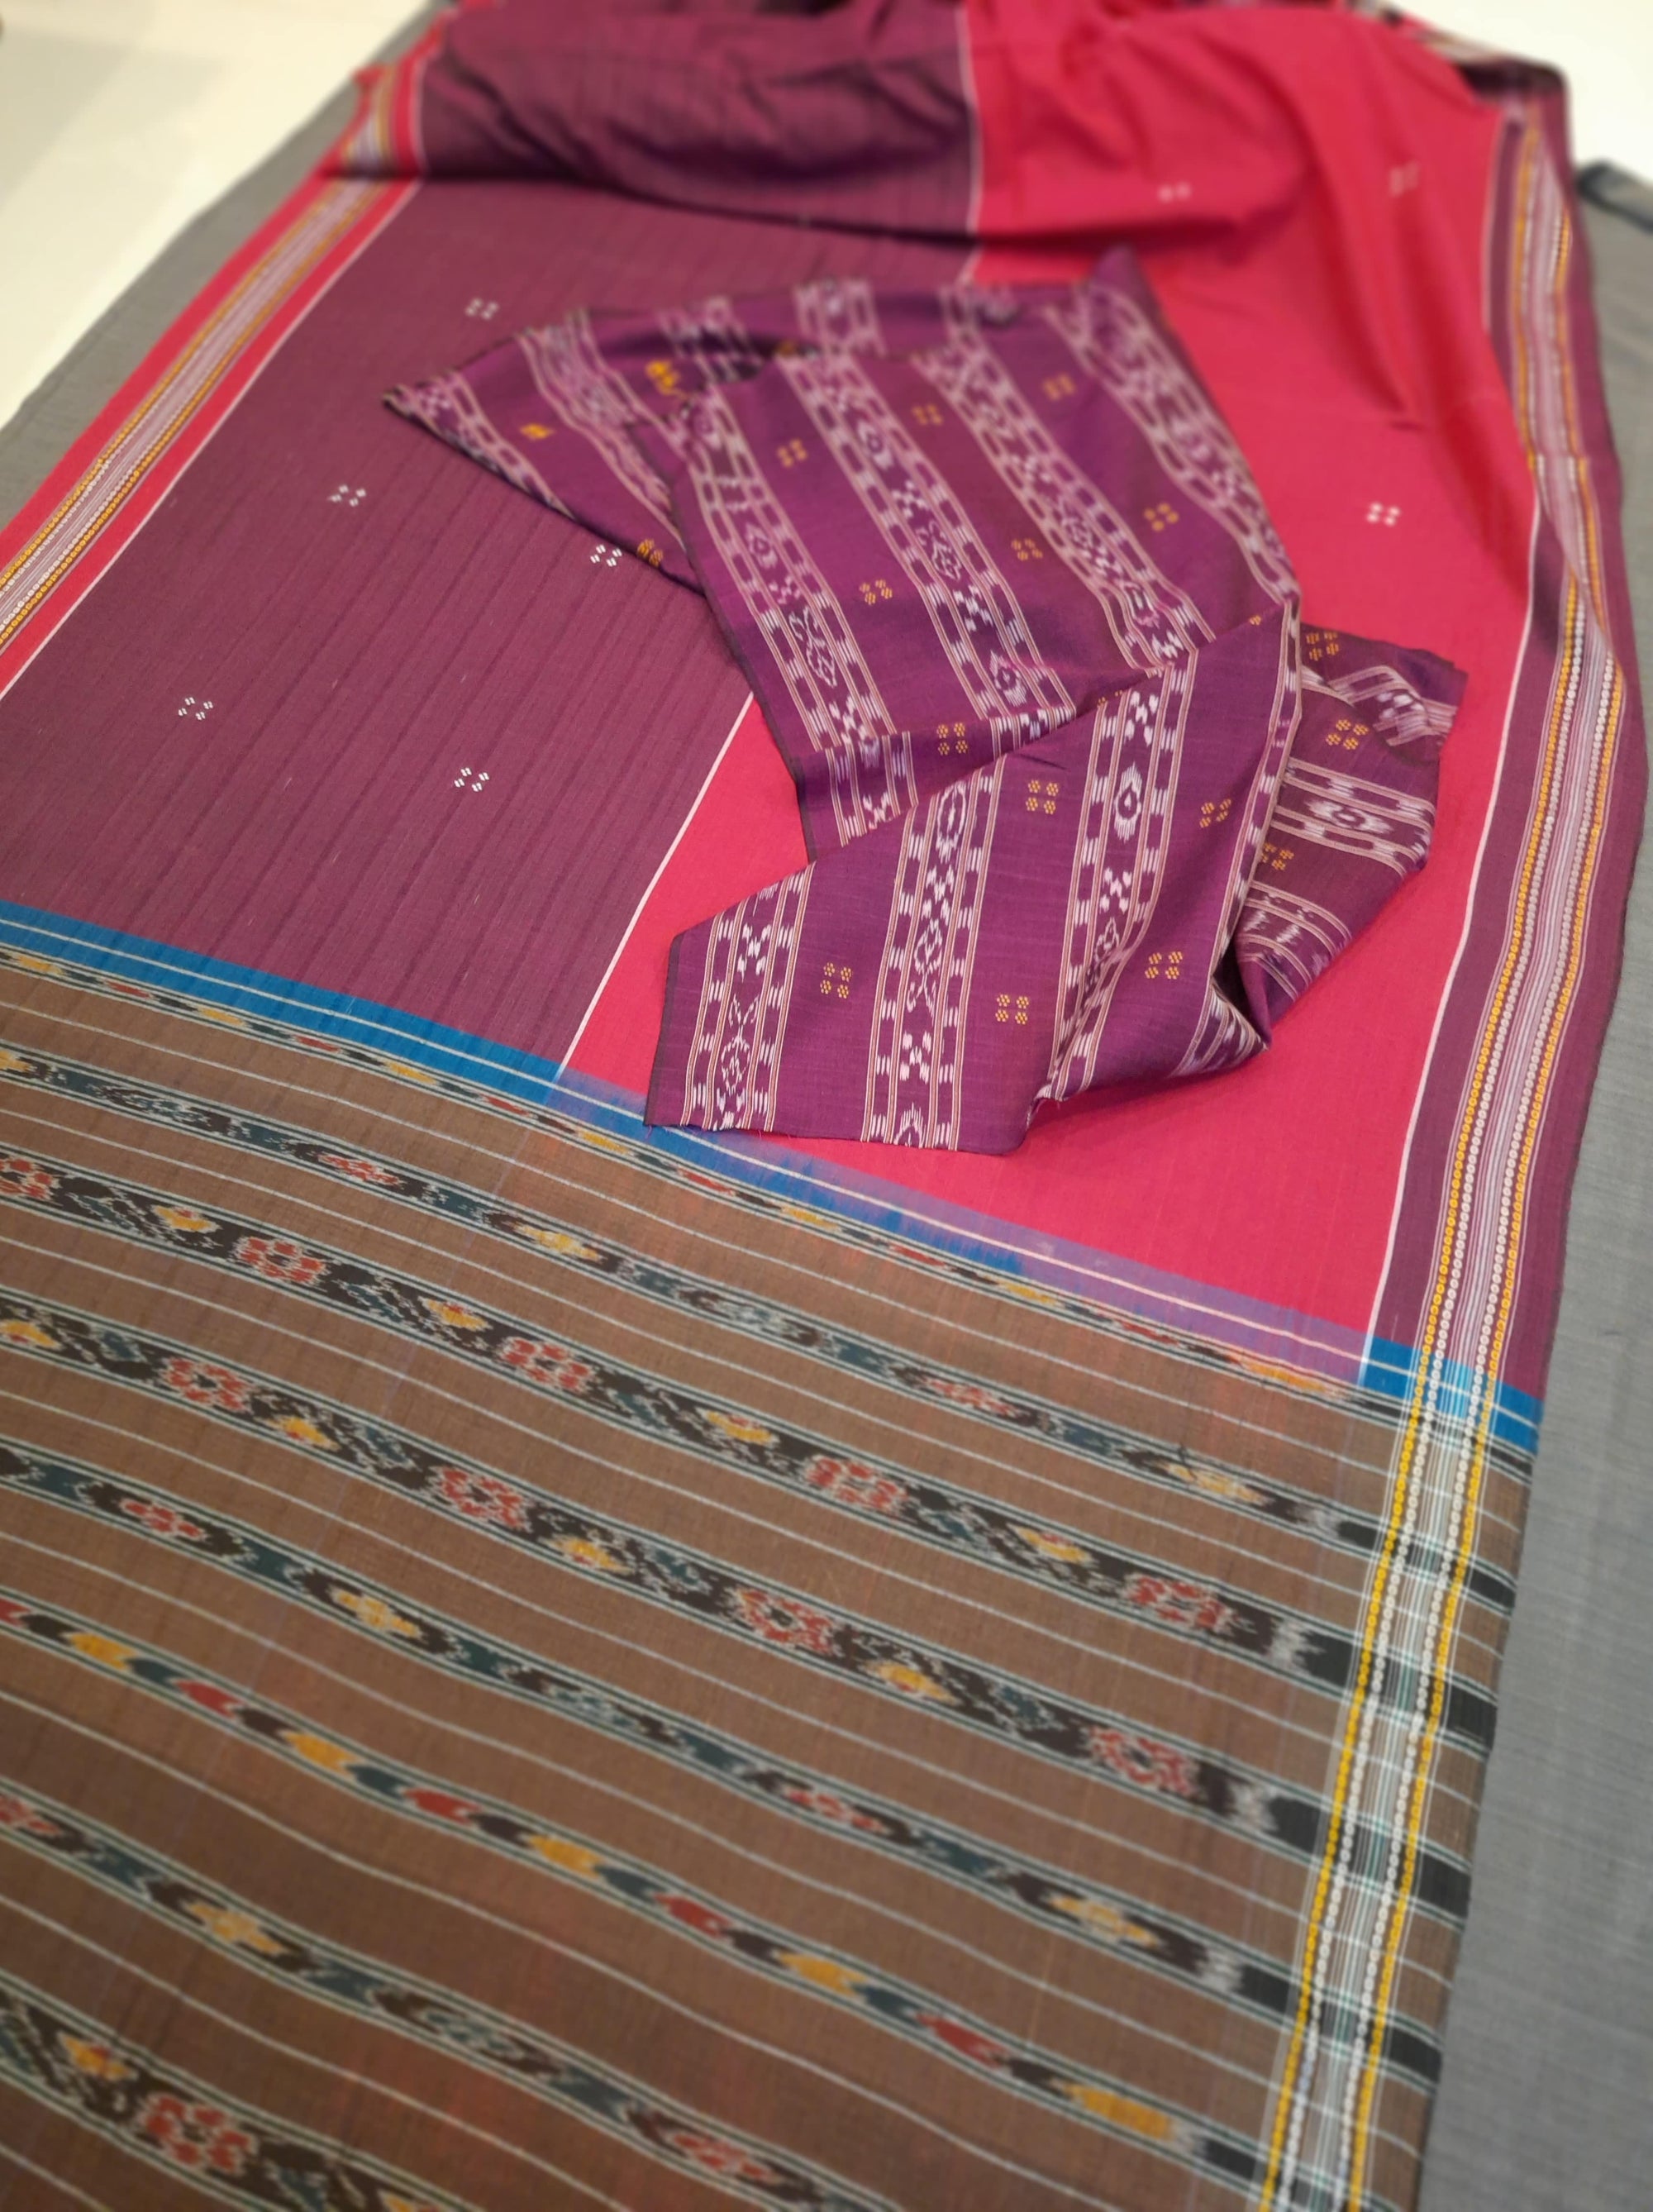 Pink Purple half half Odisha Ikat saree  with mix match cotton ikat blouse